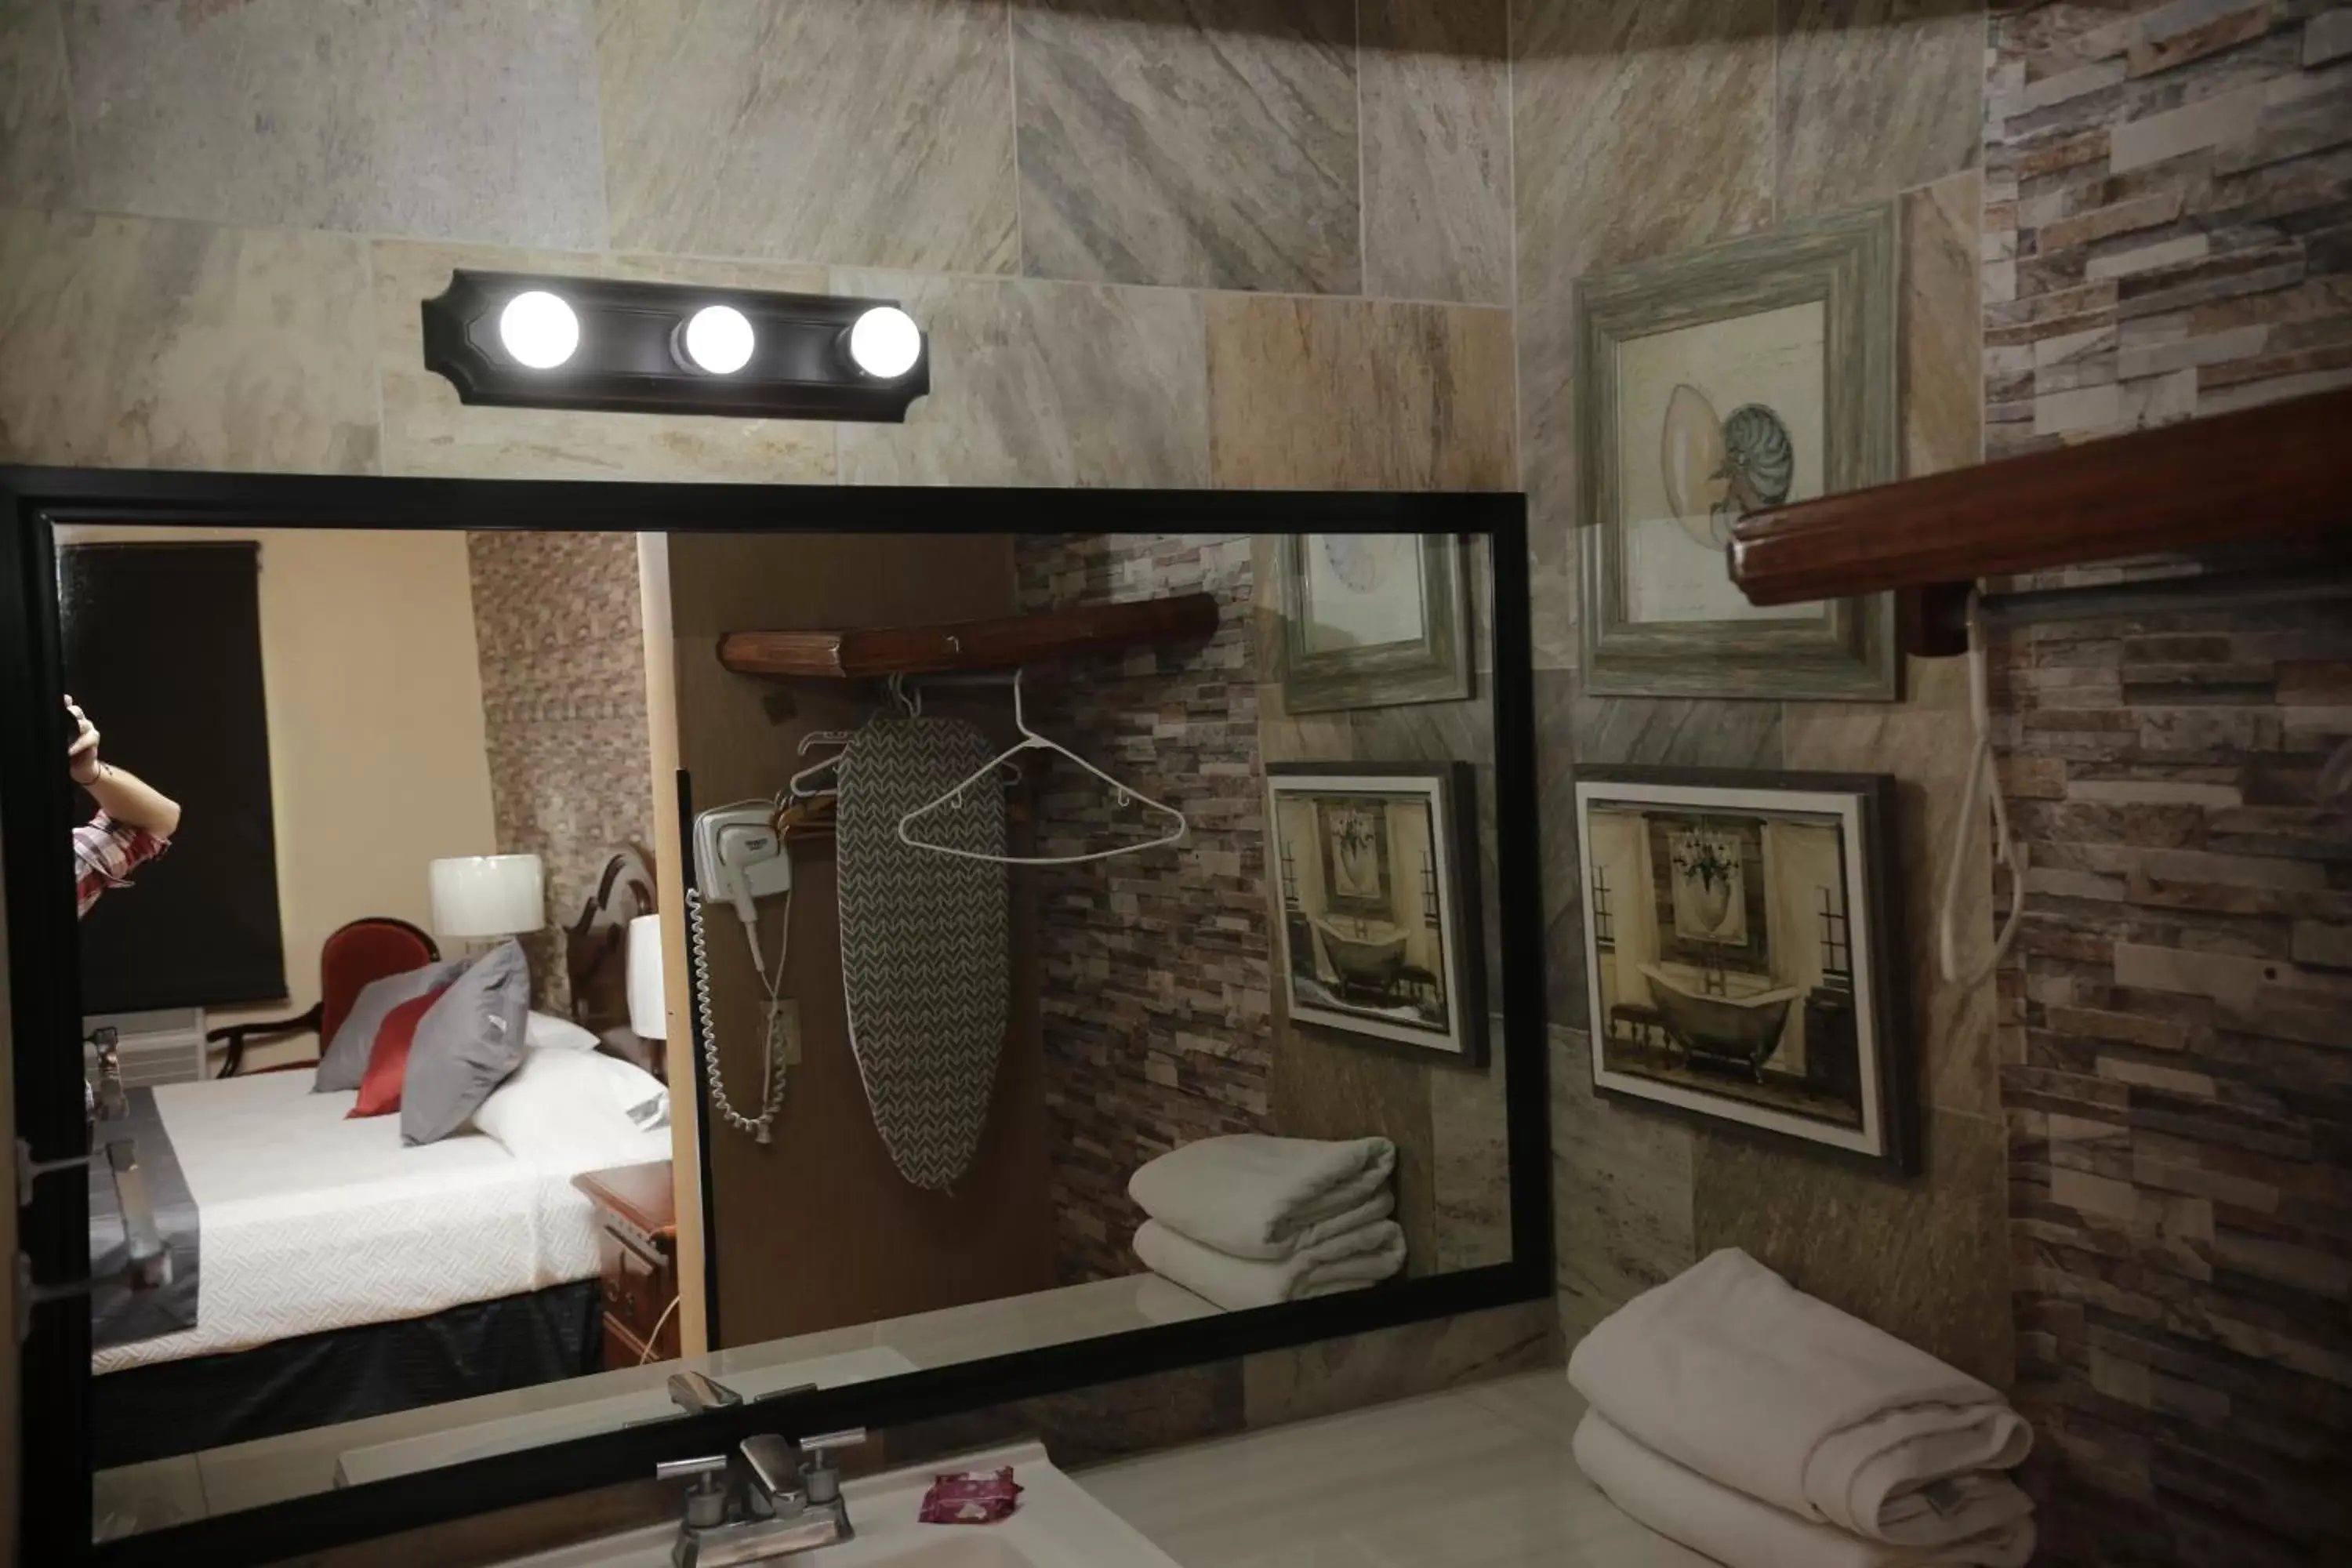 Bathroom in Hotel Posada Santa Fe